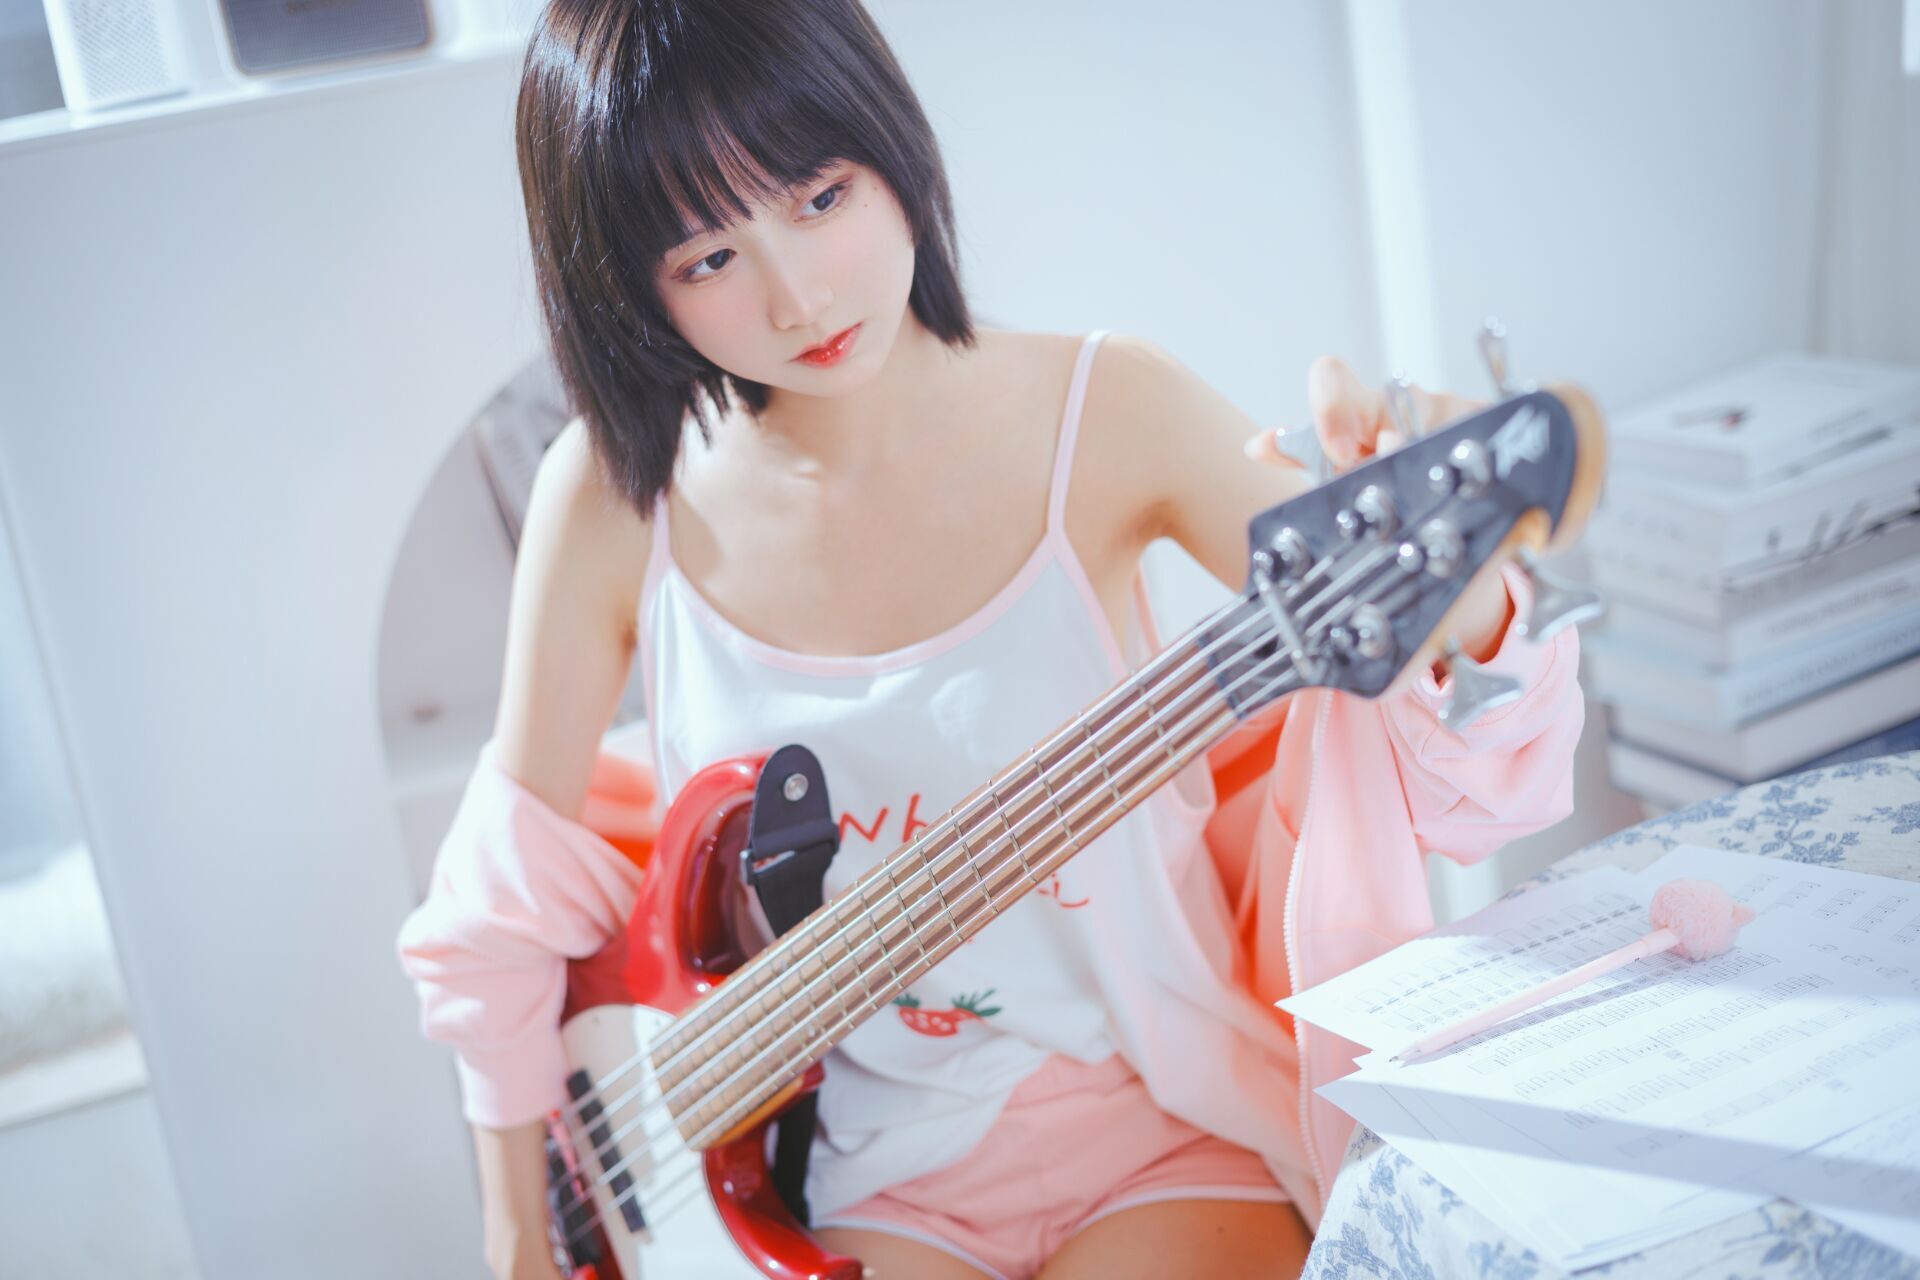 People 1920x1280 bass guitars Asian guitar musical instrument brunette red lipstick sitting women indoors indoors women